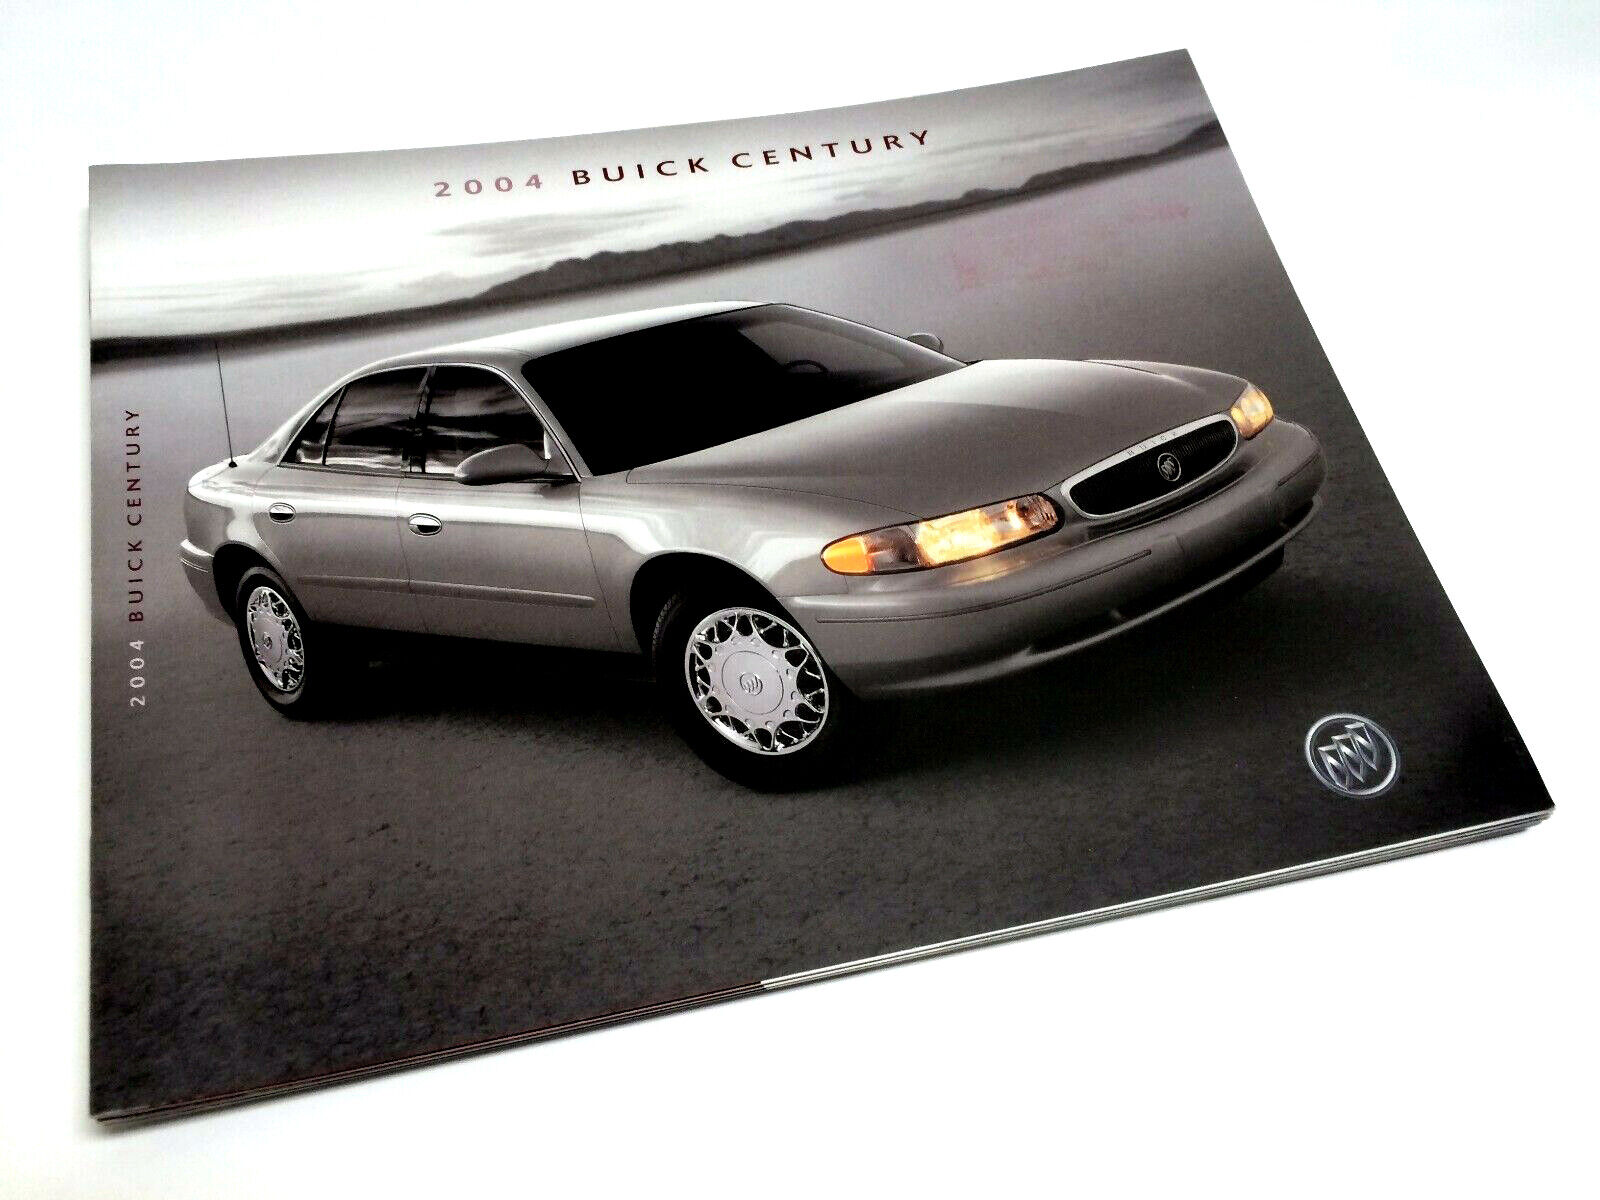 2004 Buick Century Brochure | eBay